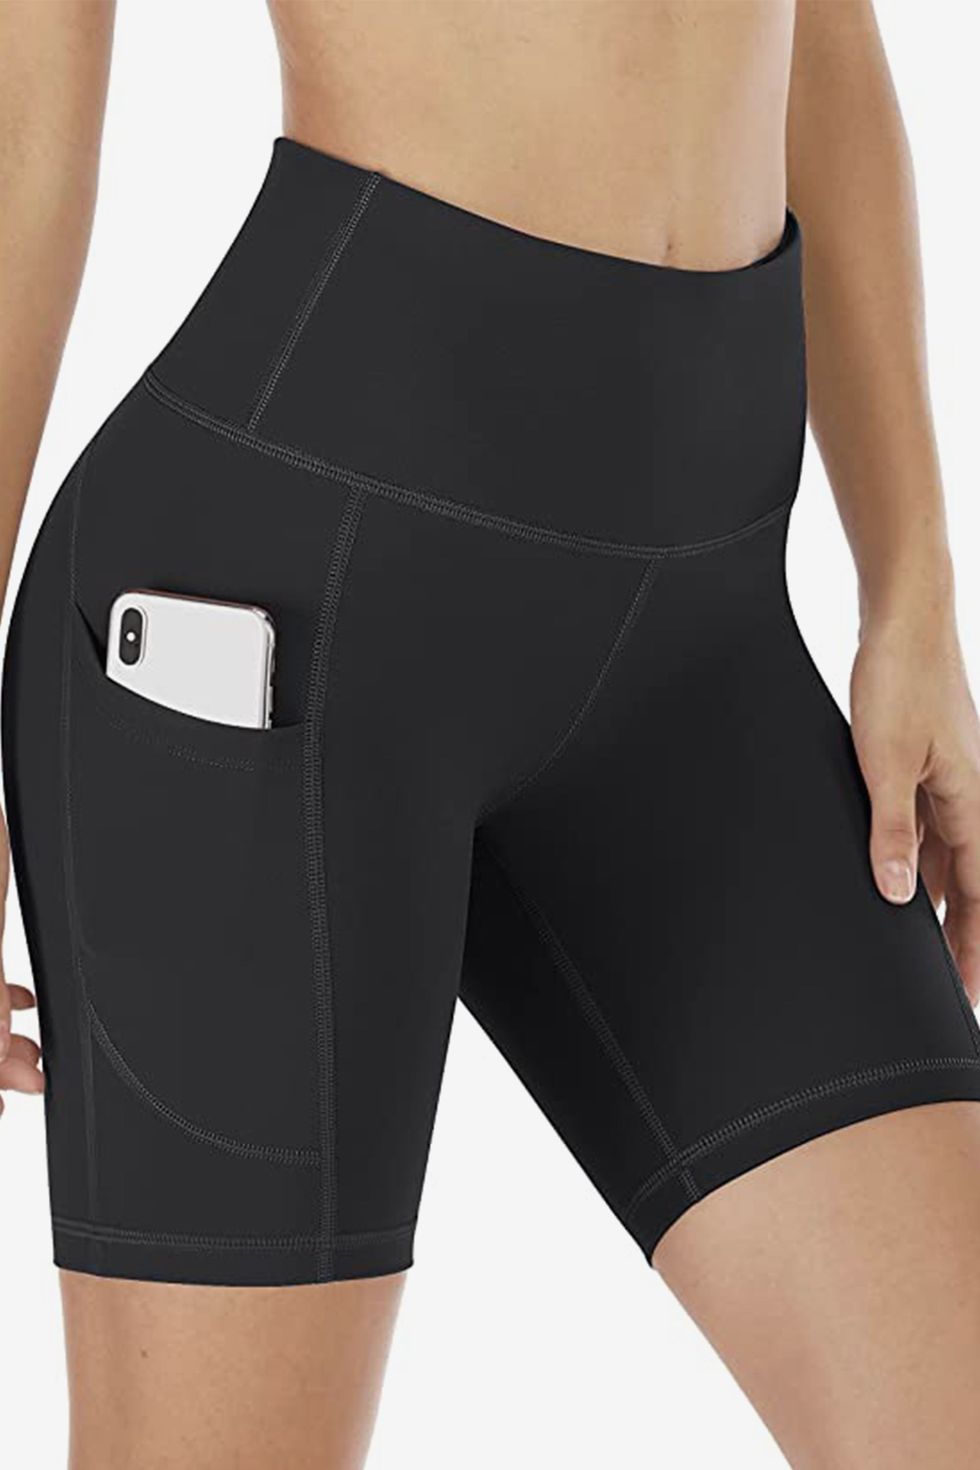 Biker Shorts Women 6” Workout Shorts with Pockets 